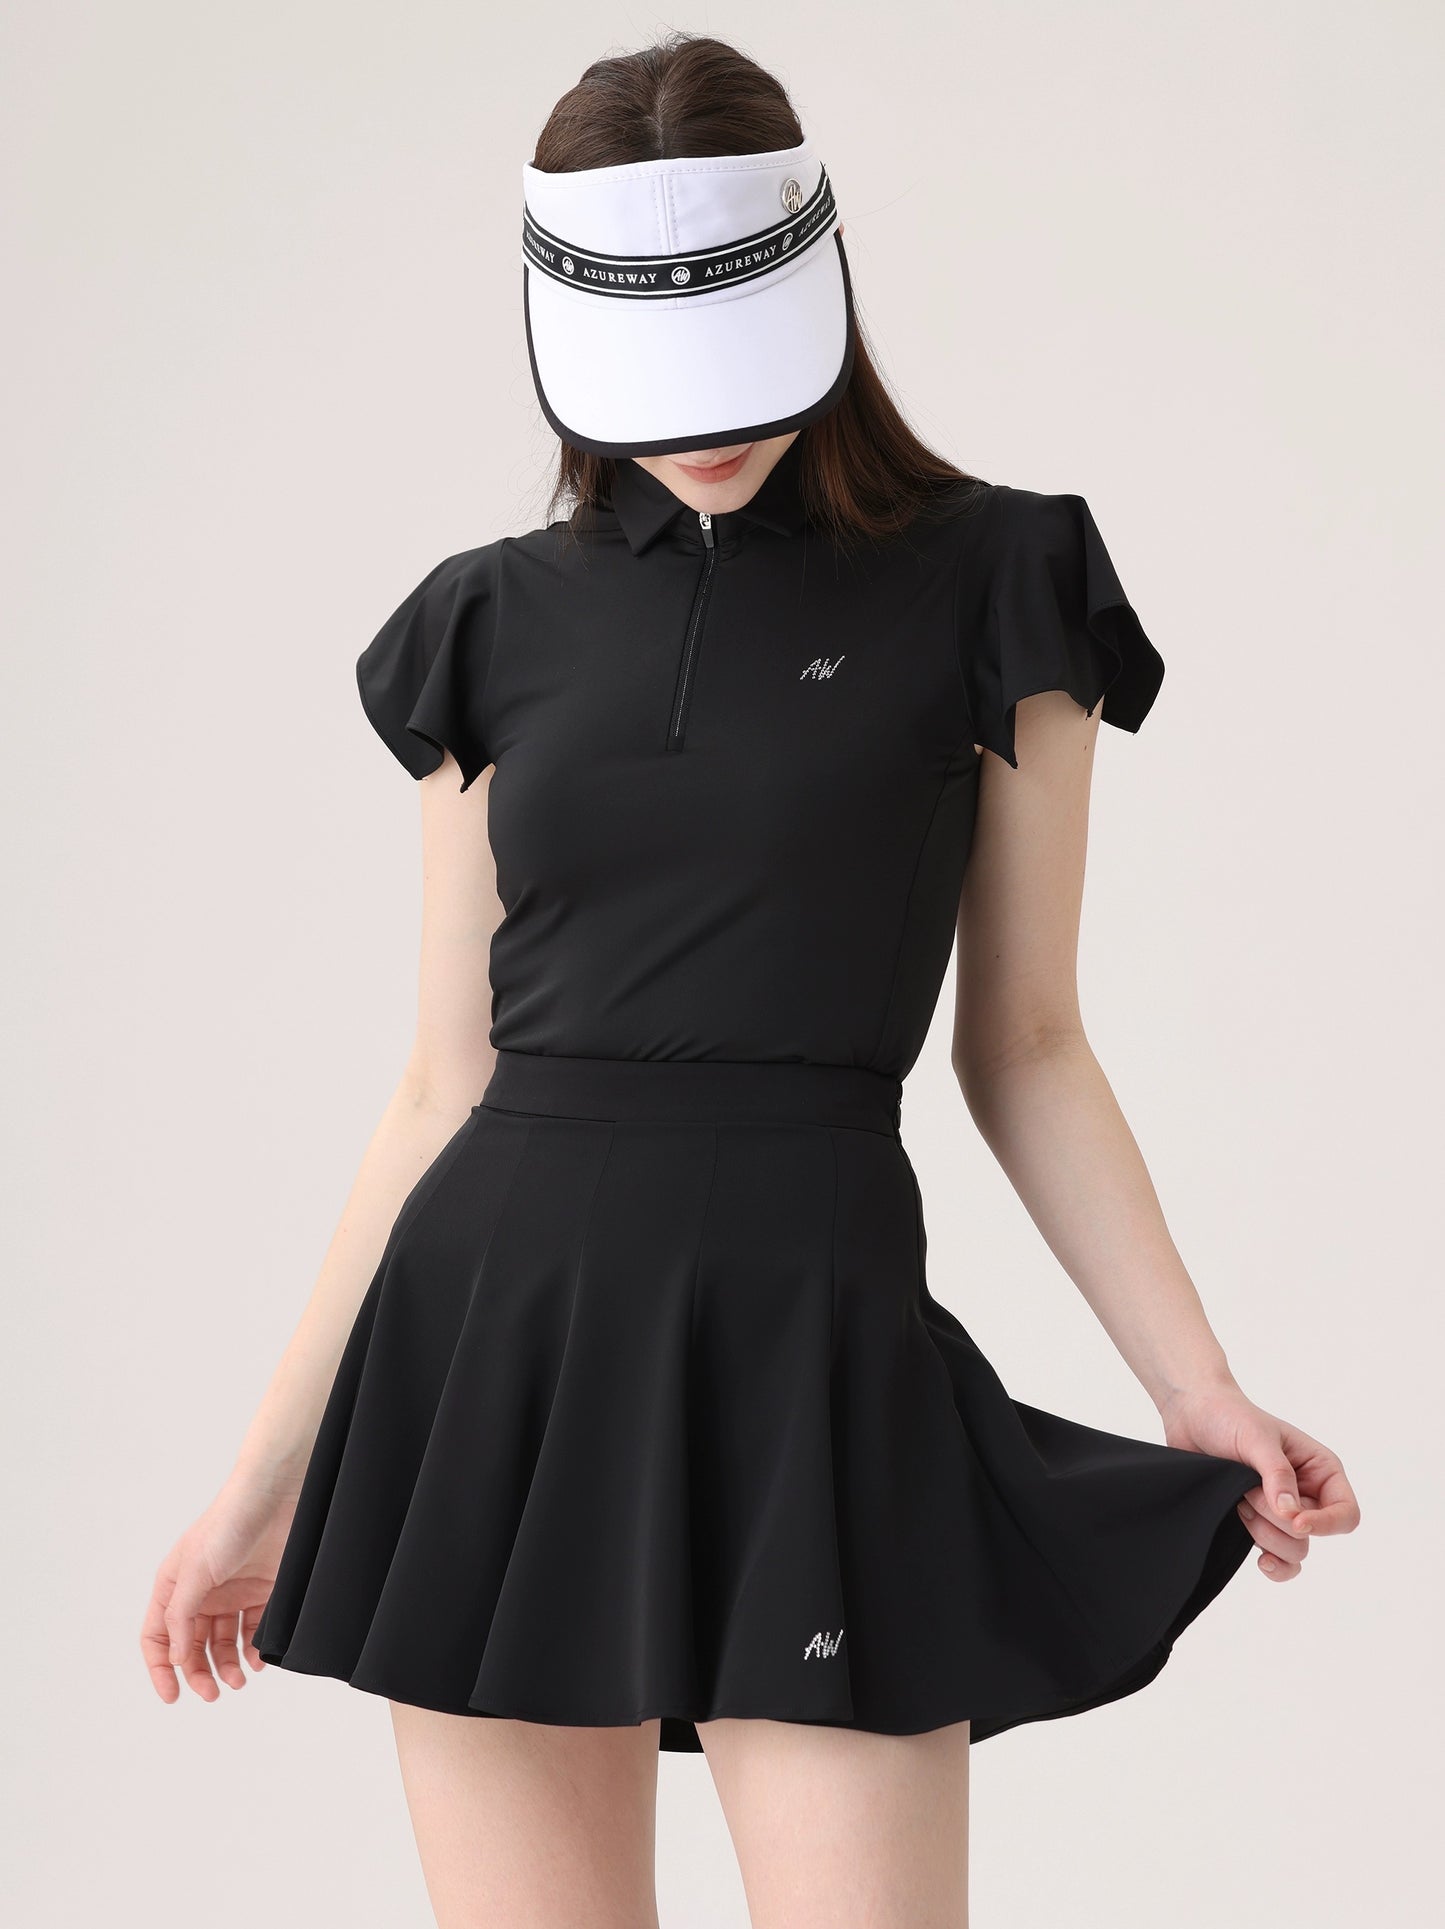 Azureway Ladies Golf Skirt AW-S4502